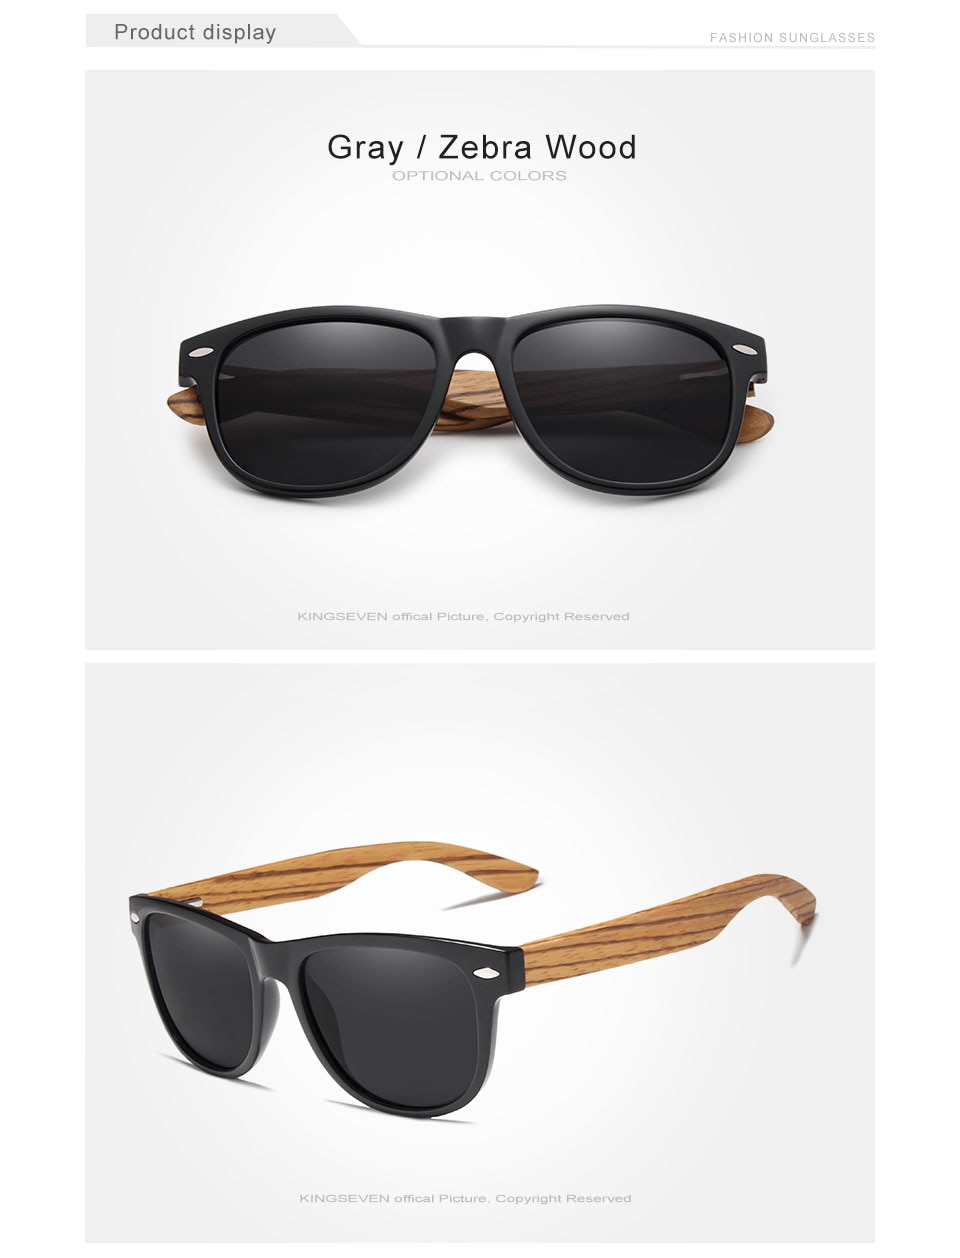 KINGSEVEN Fashion Wooden Polarized Square Sunglasses Men Women